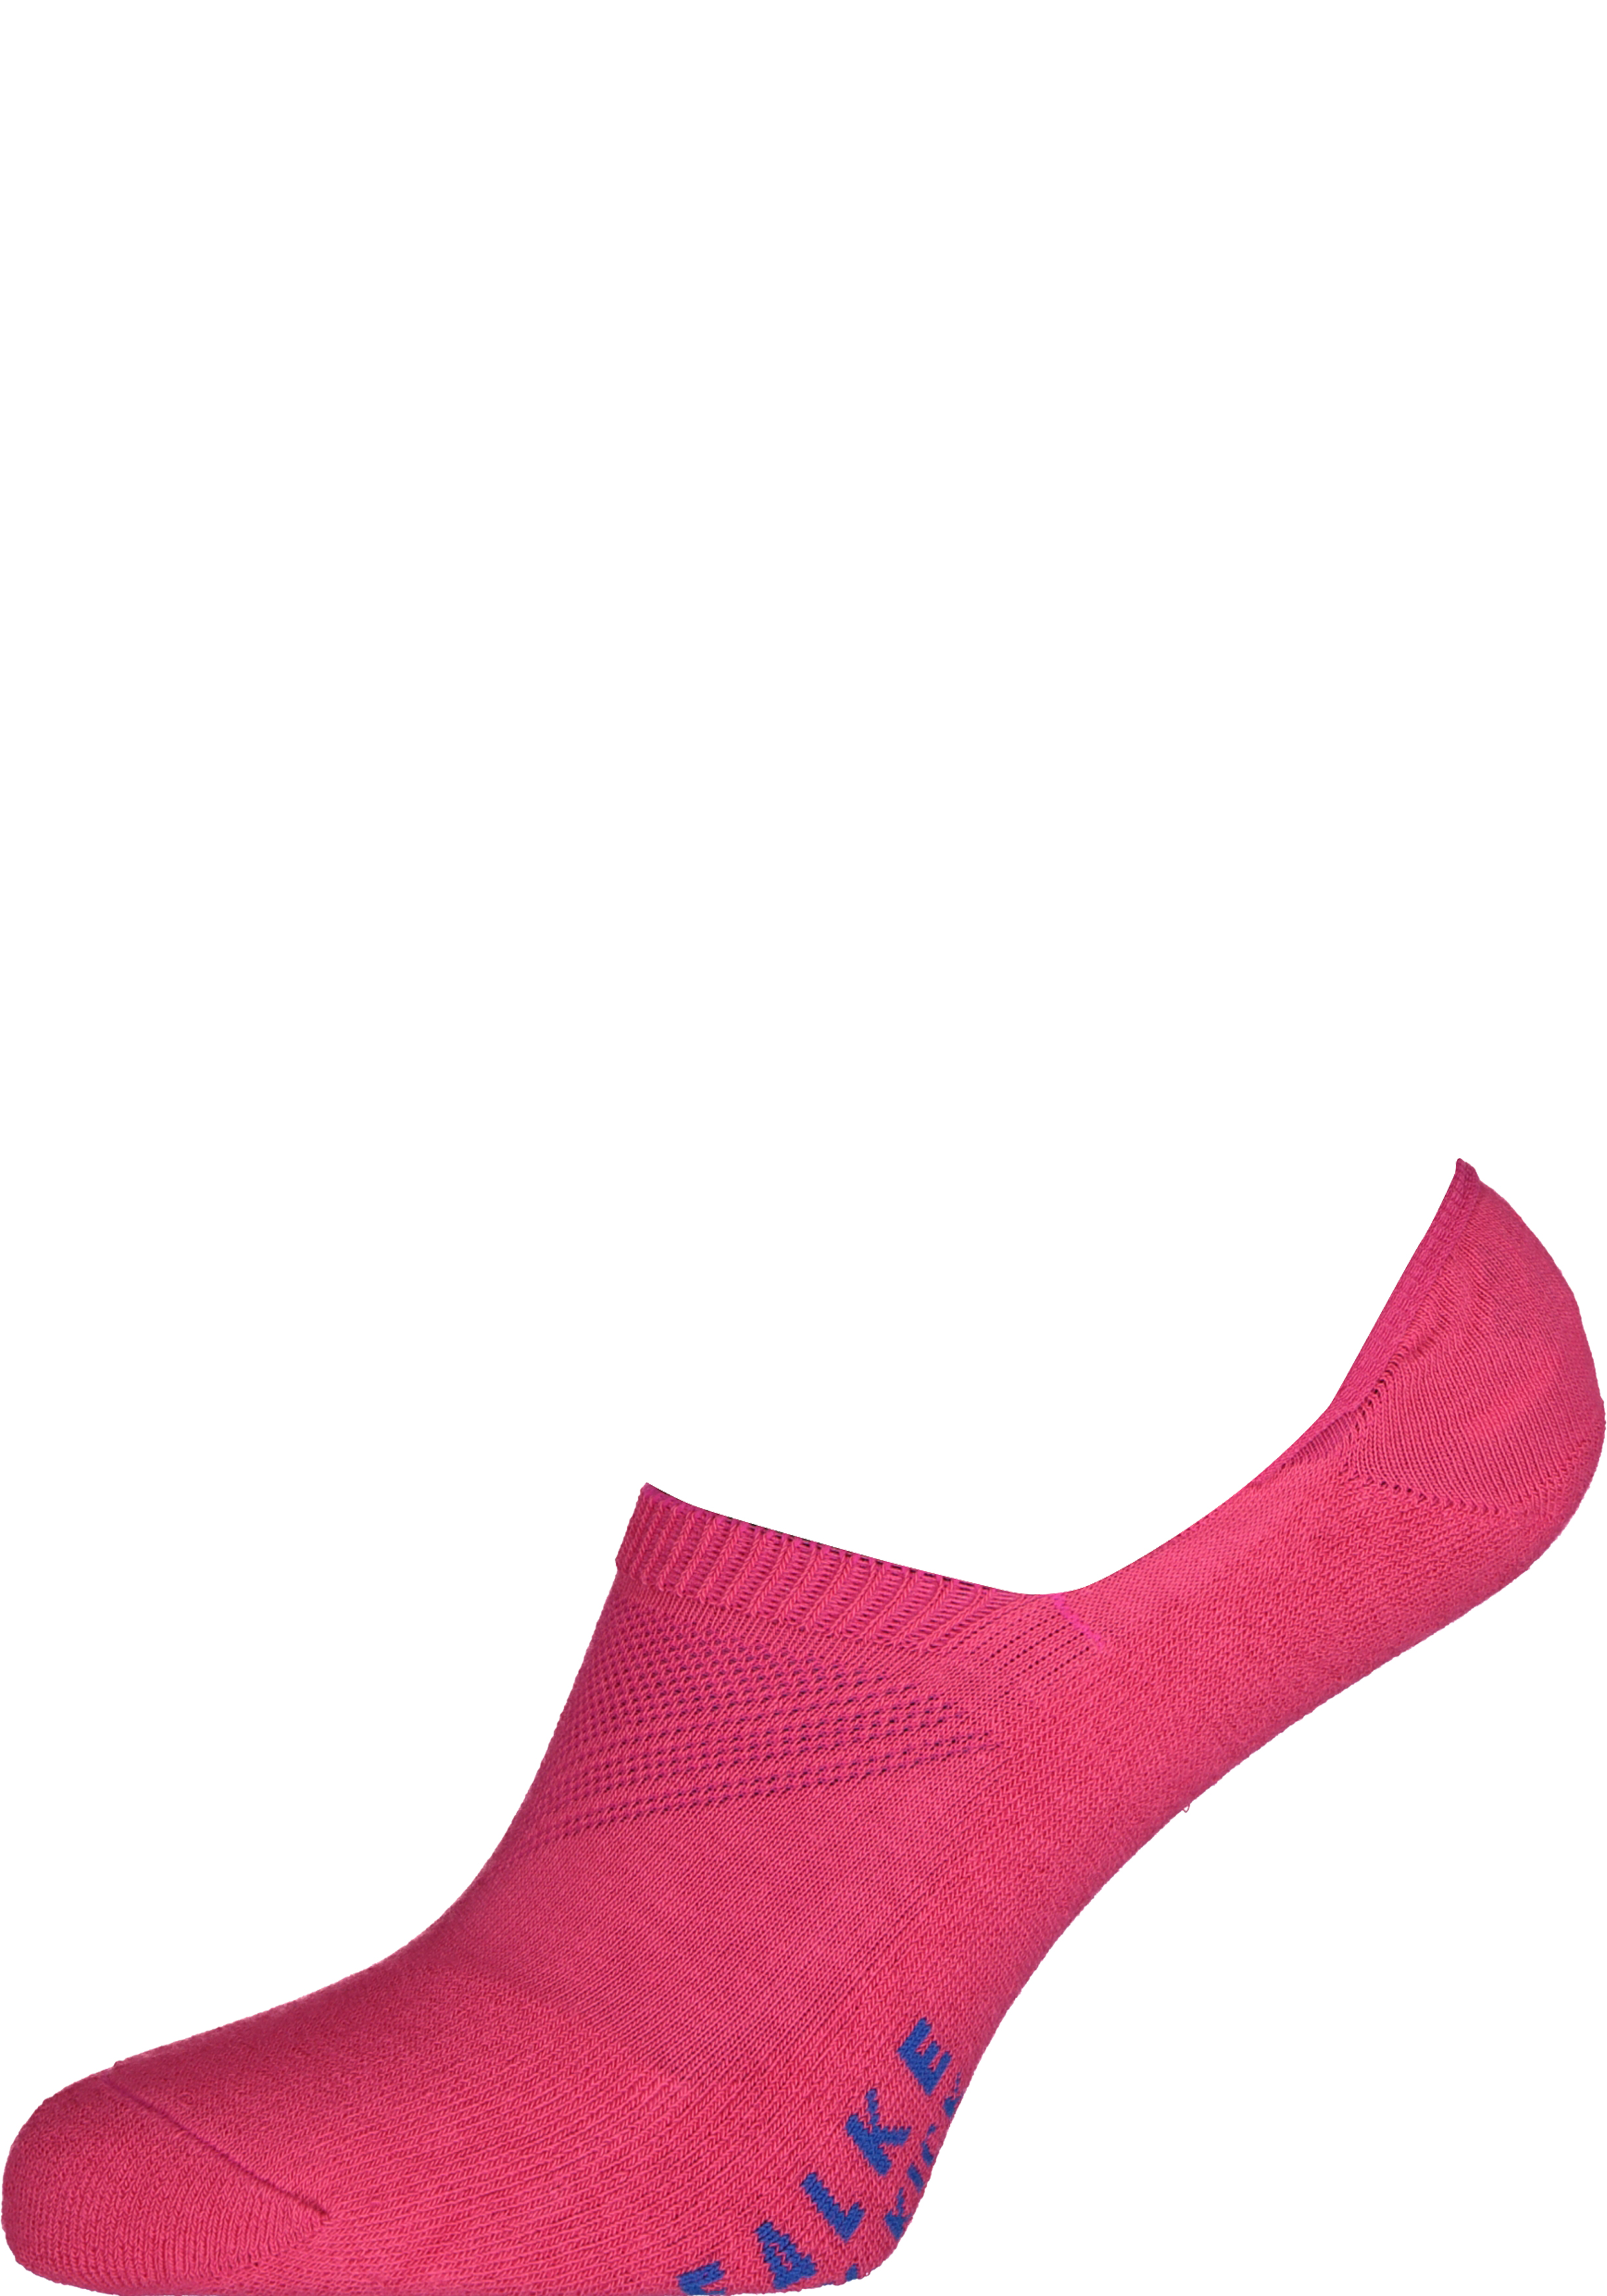 tarief Wapenstilstand Sicilië FALKE Cool Kick invisible unisex sokken, fuchsia roze (gloss) - Zomer SALE  tot 50% korting